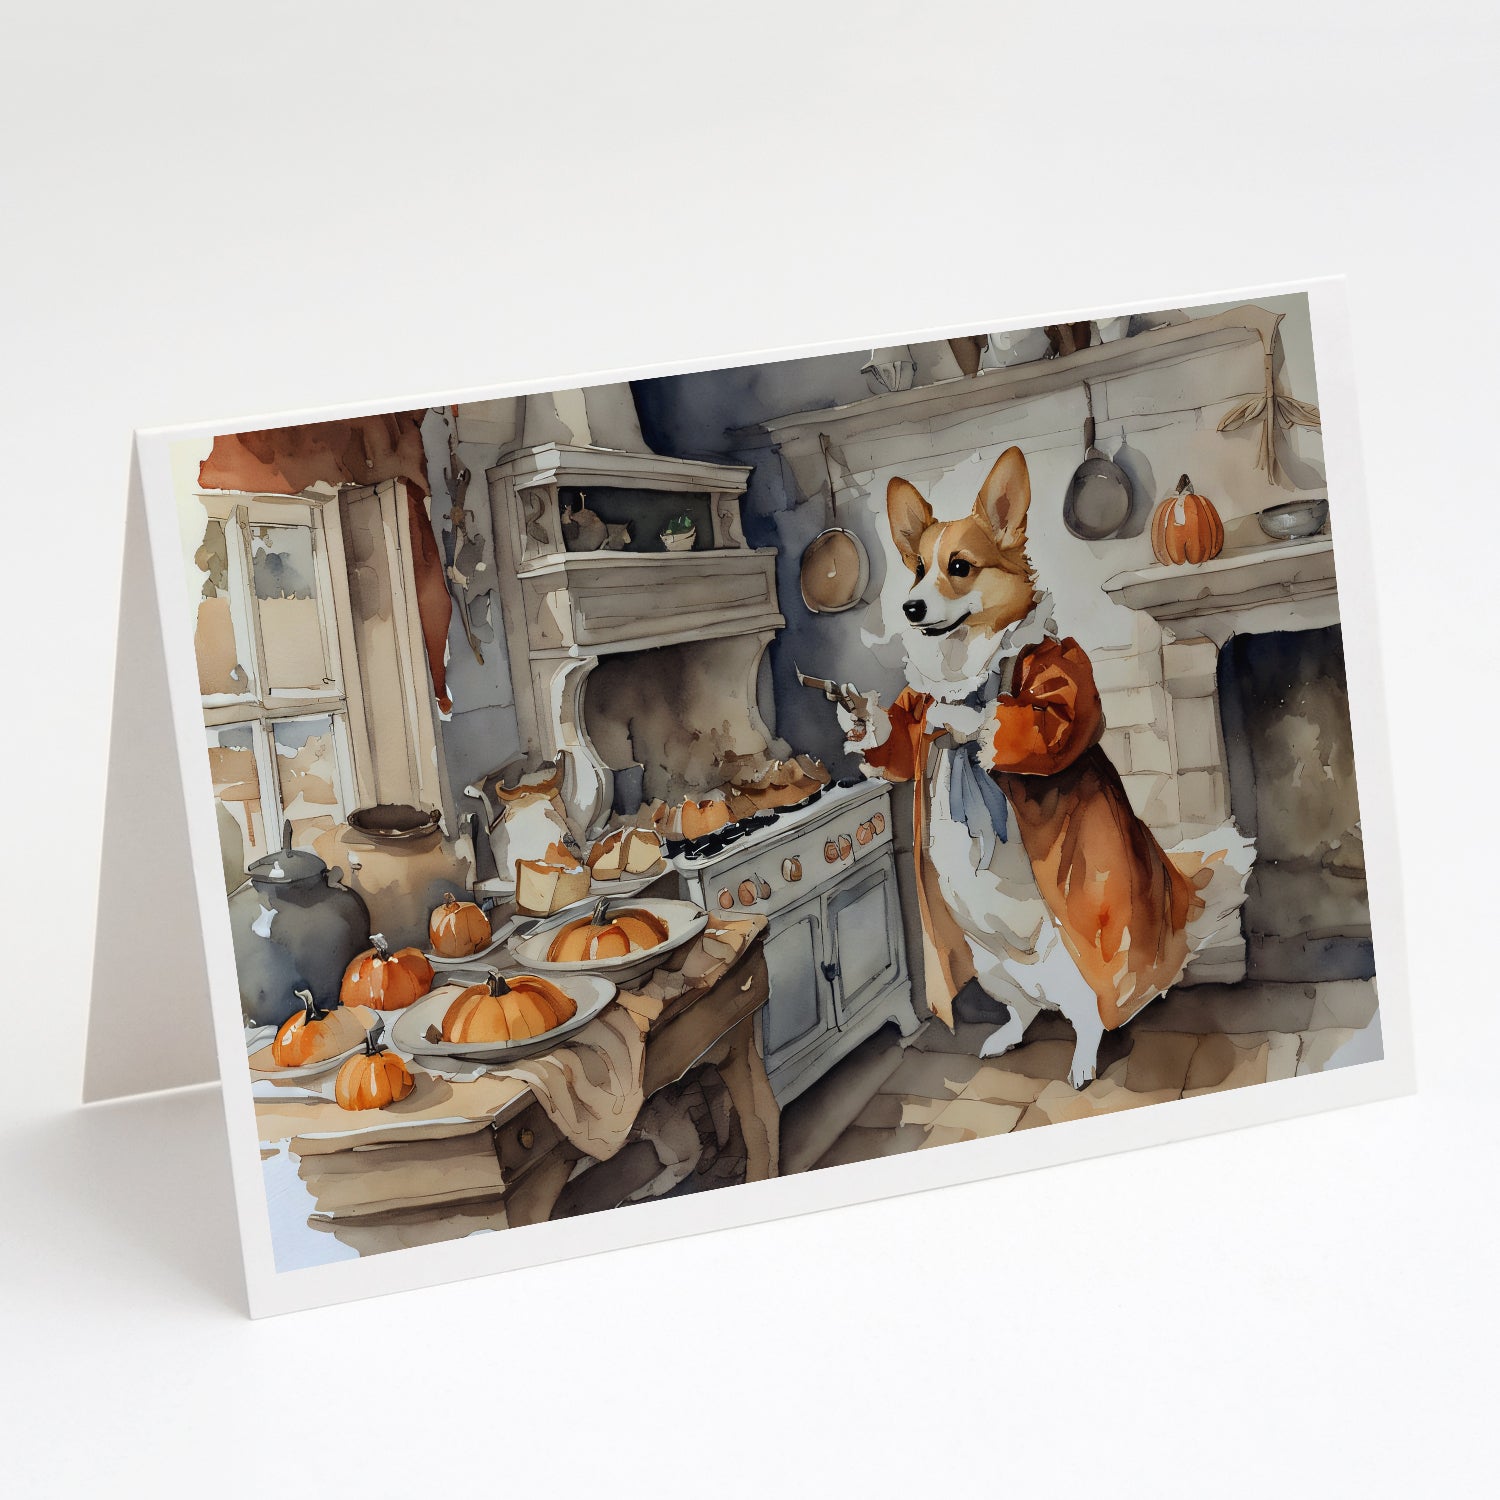 Buy this Corgi Fall Kitchen Pumpkins Greeting Cards and Envelopes Pack of 8